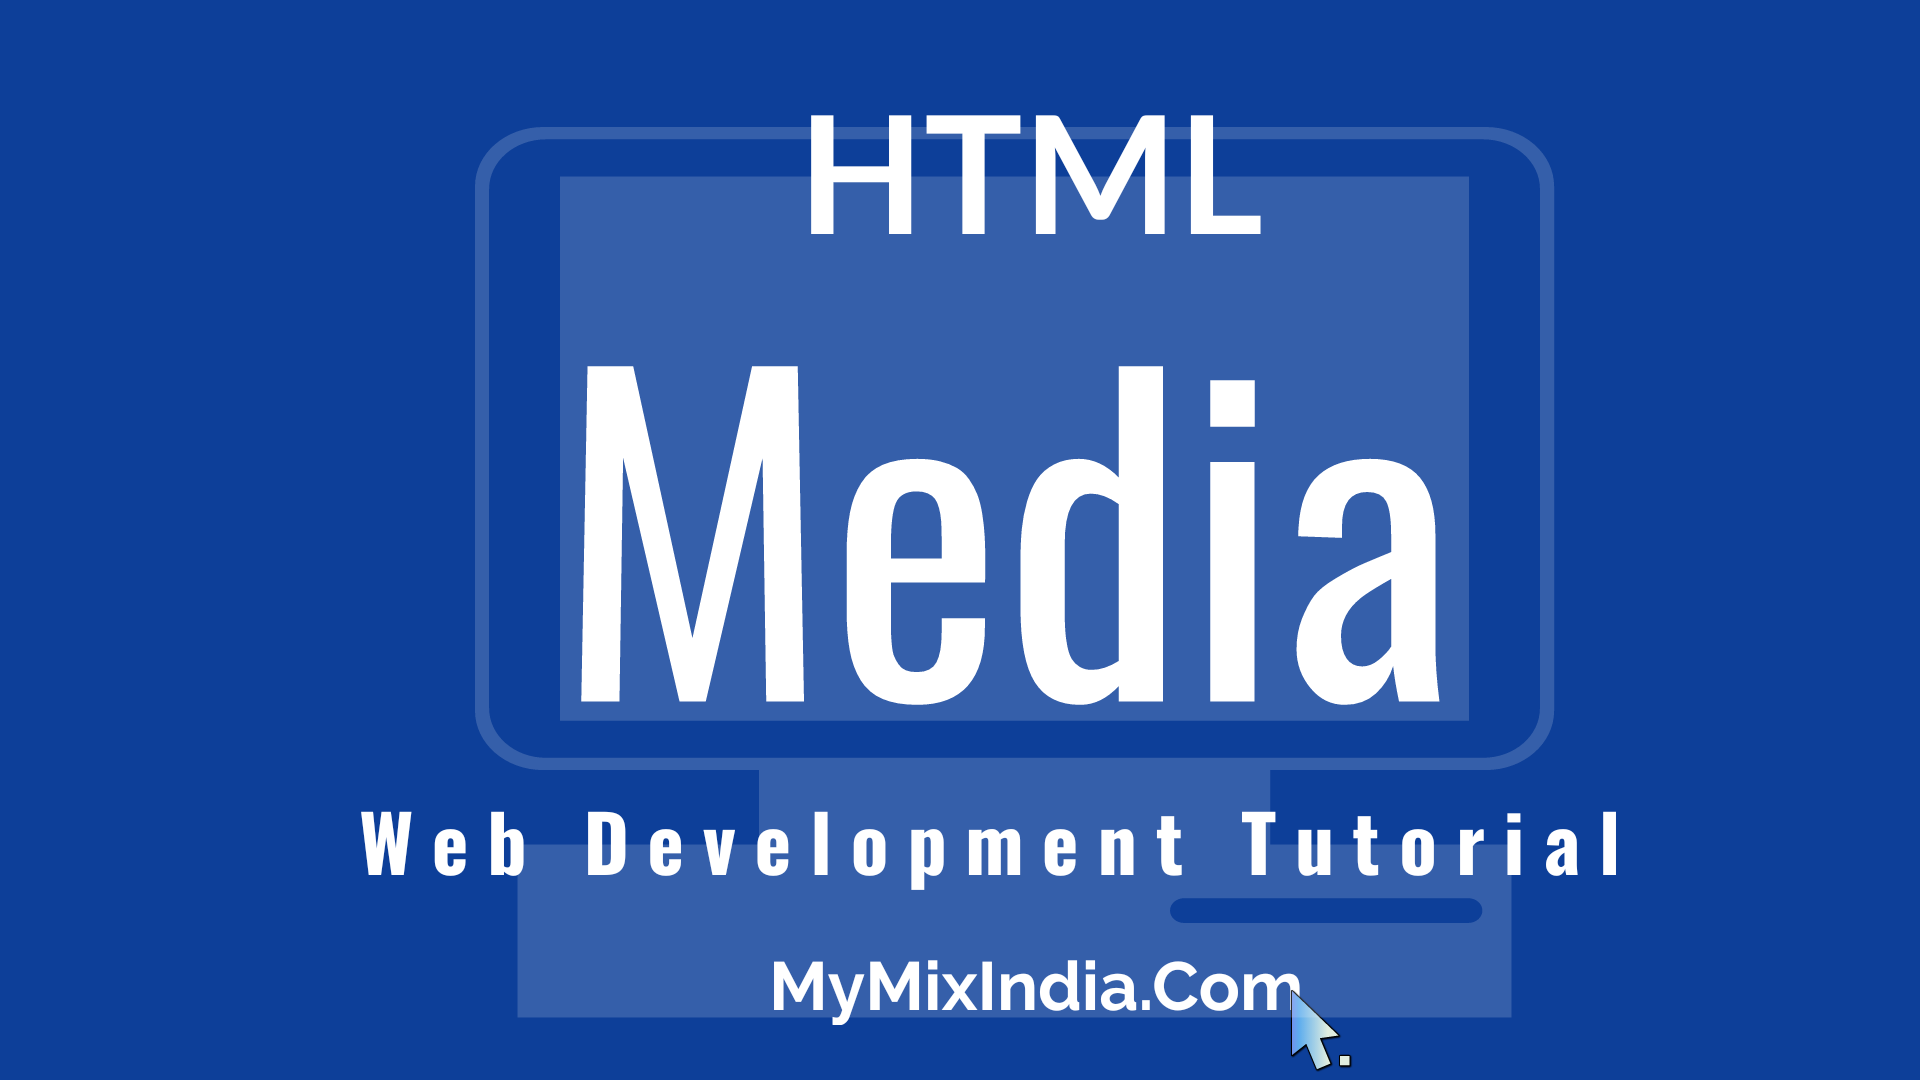 mmi-html-tutorials-html-Media-web-development-tutorials